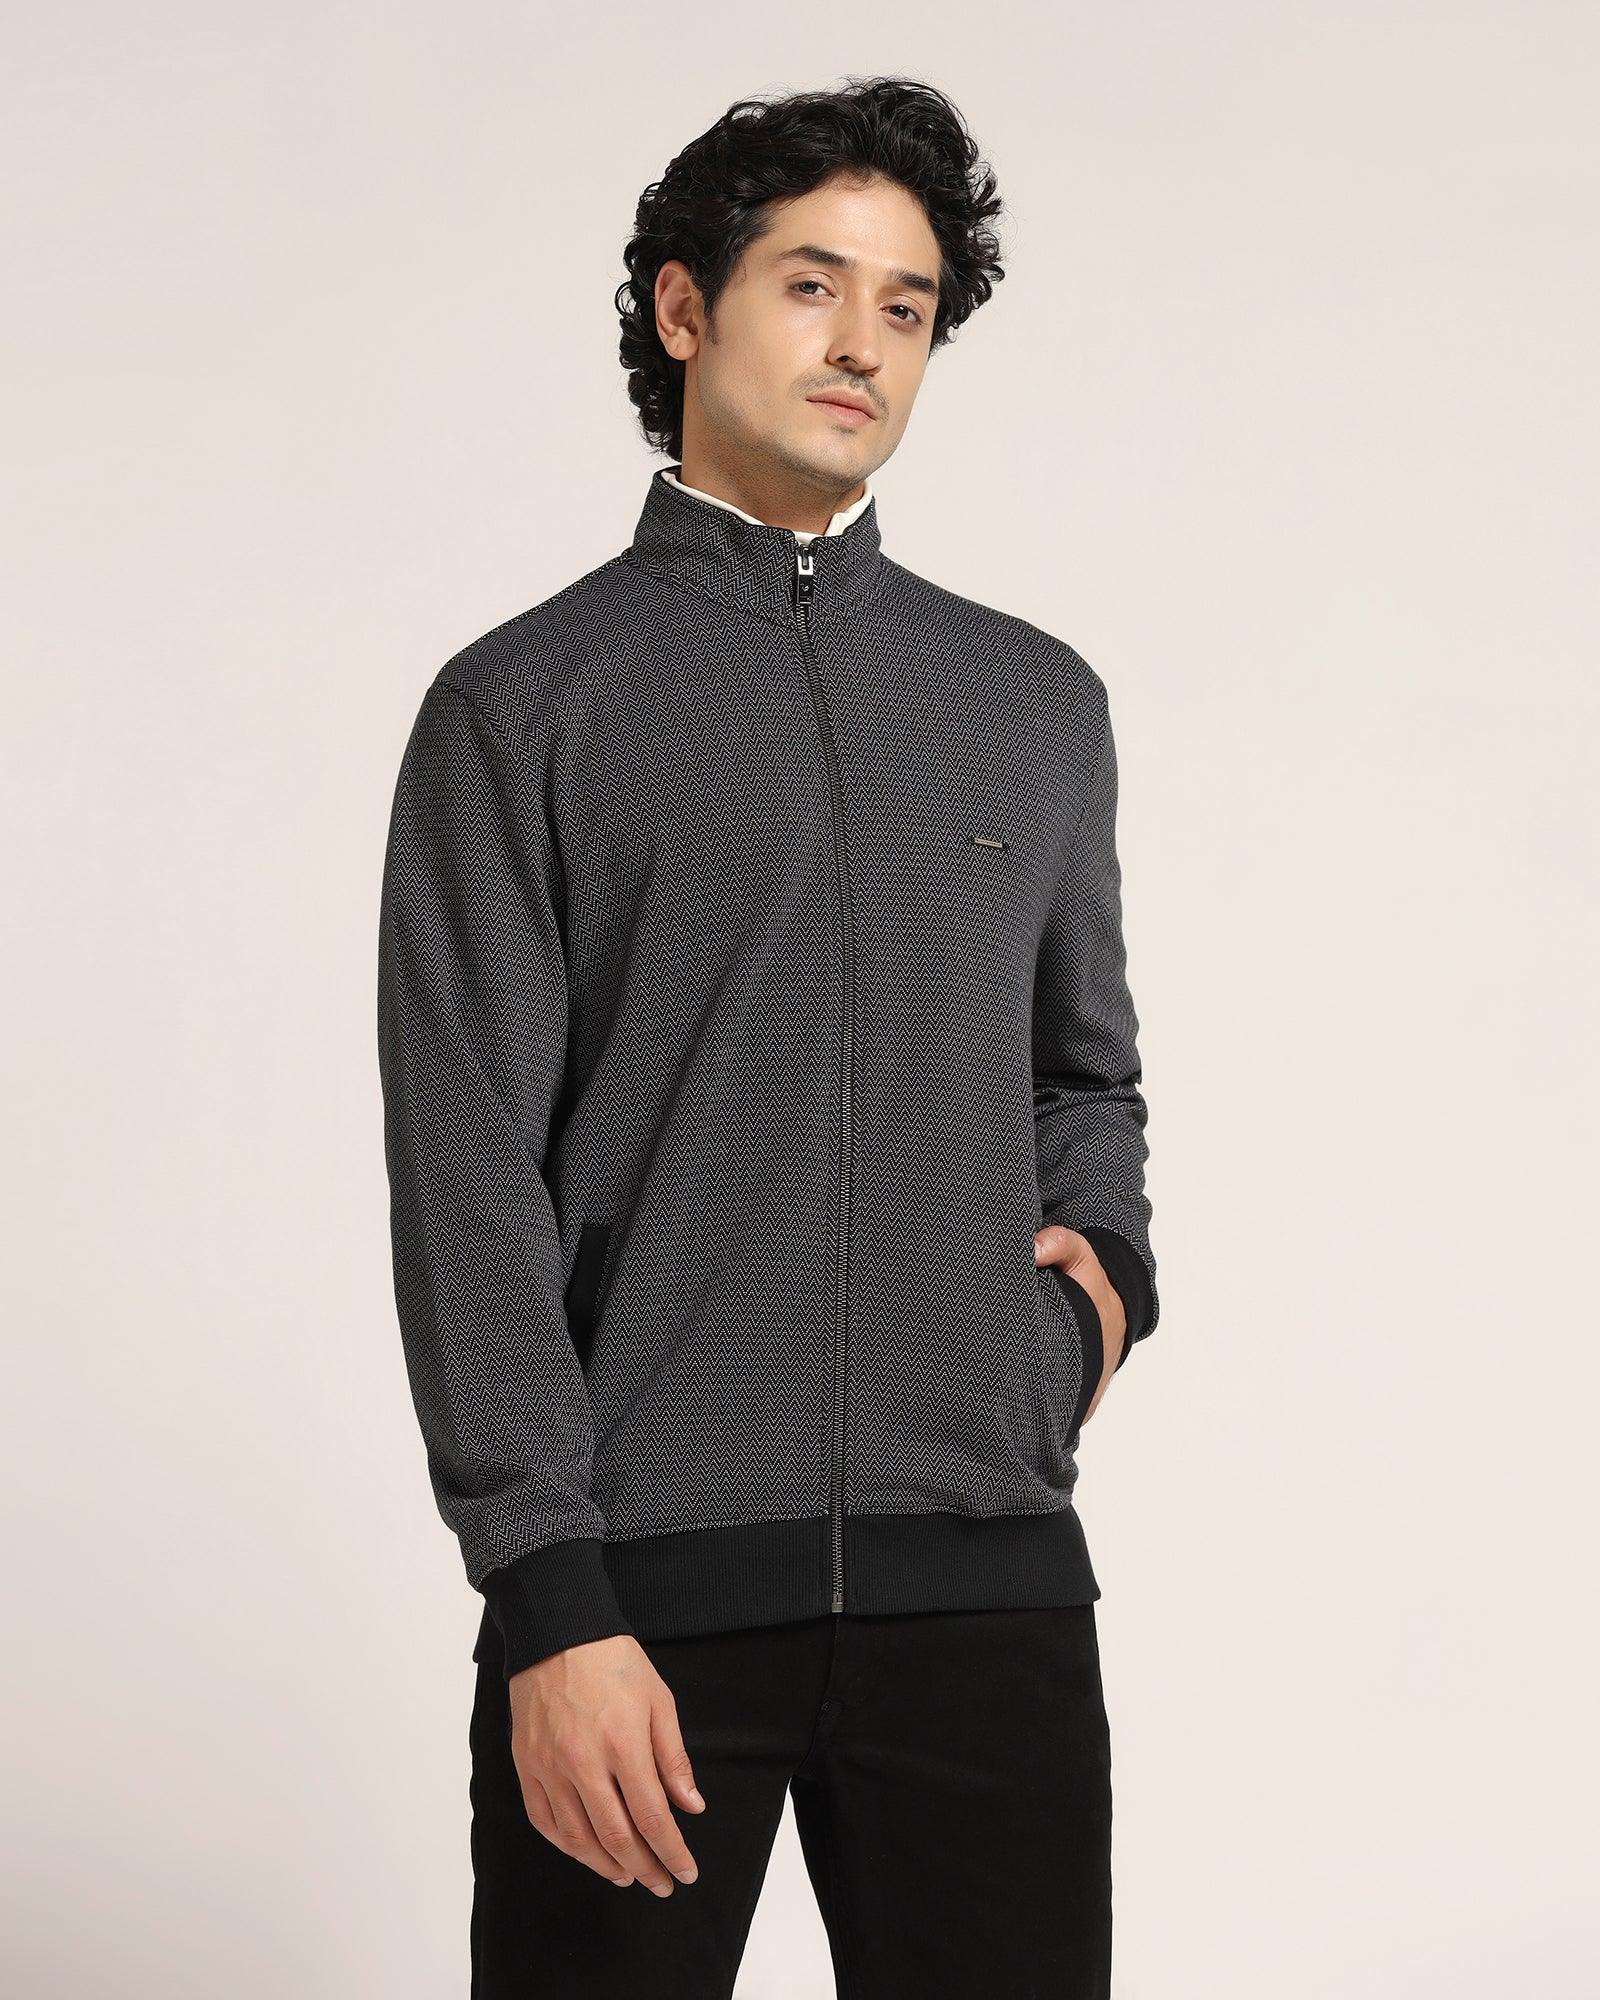 High Neck Black Textured Sweatshirt - Sept